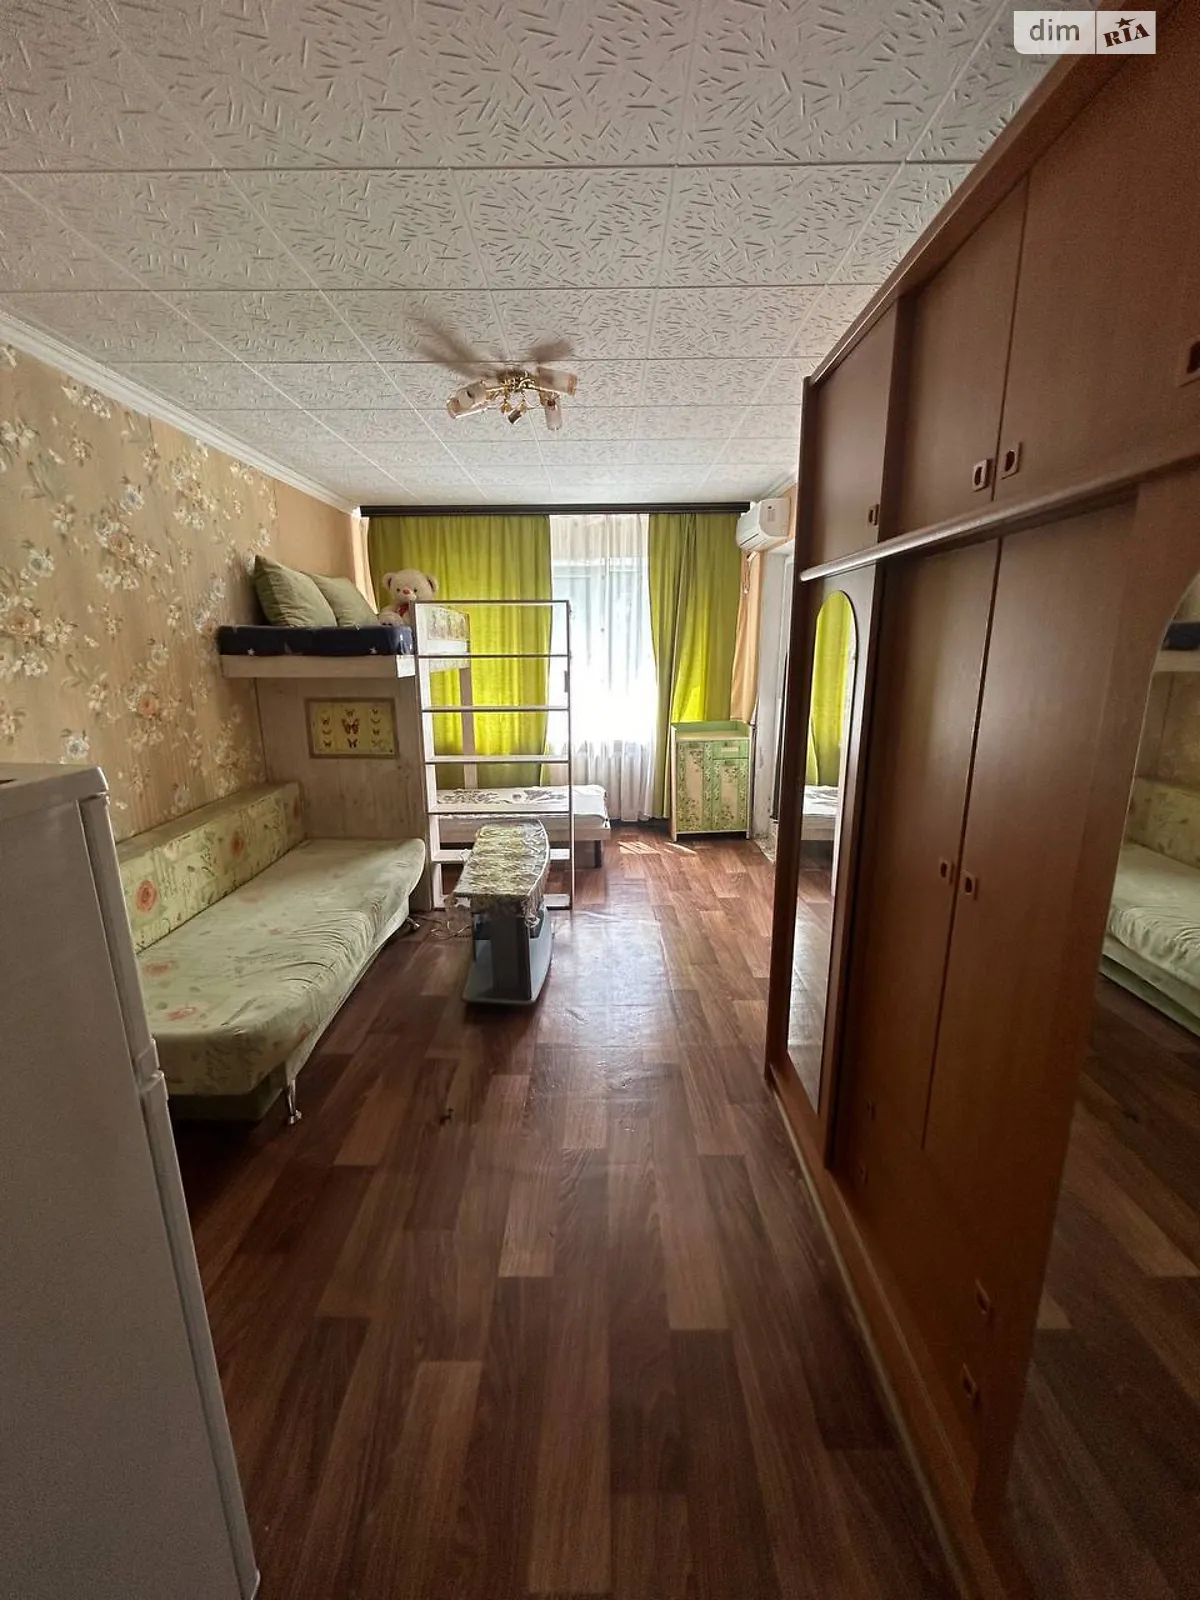 Продается комната 17.2 кв. м в Одессе, цена: 8000 $ - фото 1